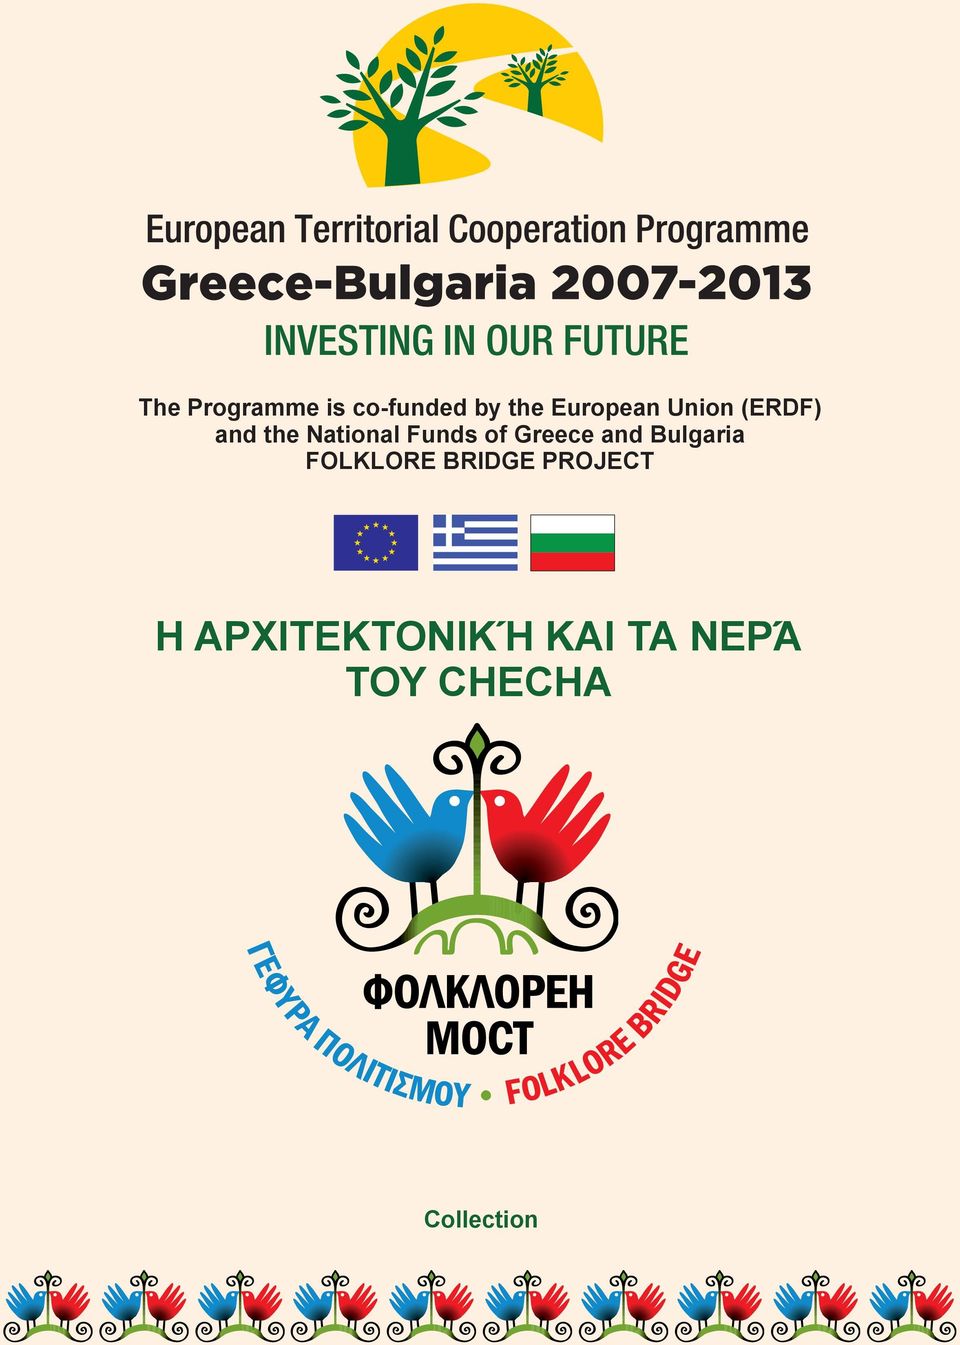 Greece and Bulgaria FOLKLORE BRIDGE PROJECT